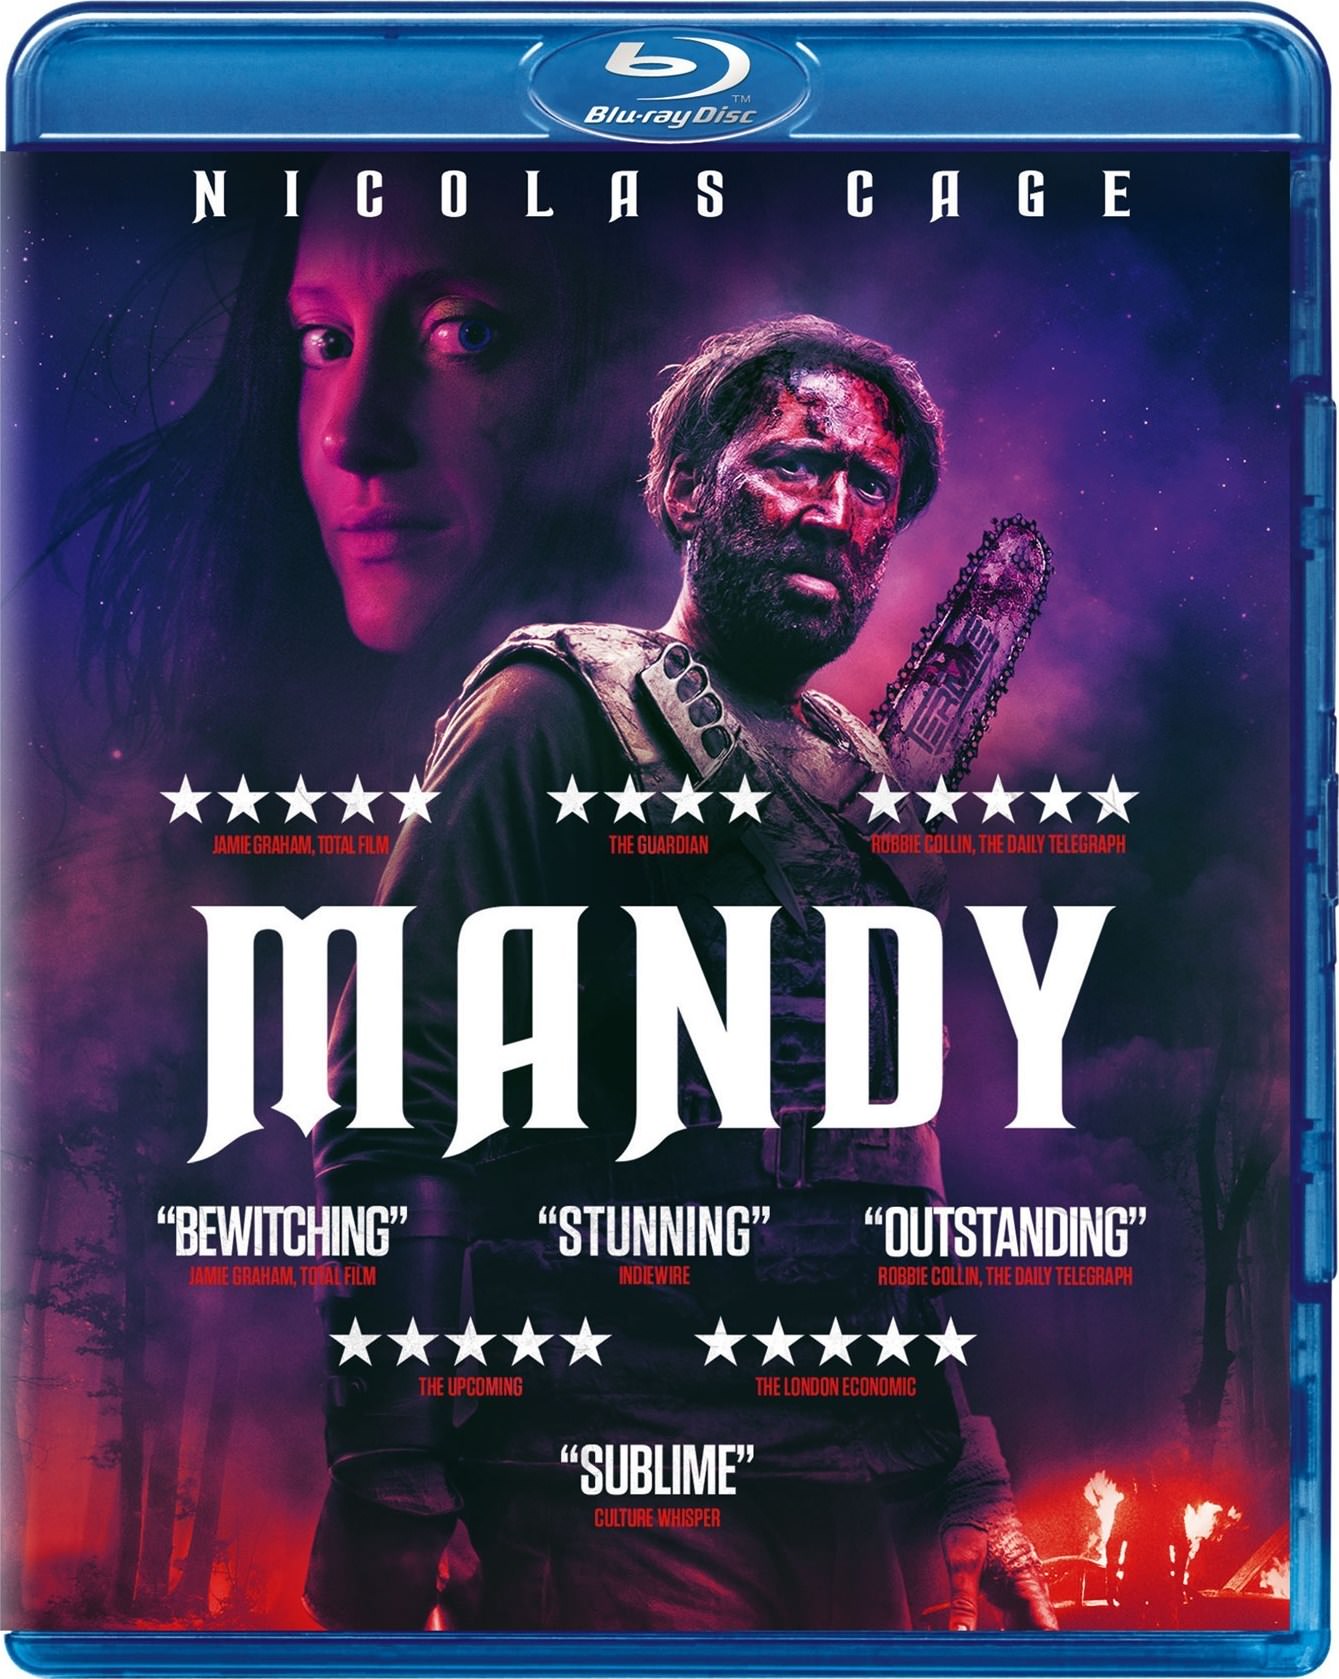 [曼蒂].Mandy.2018.BluRay.1080p.AVC.DTS-HD.MA.5.1-DIY@HDHome   36.84GB-1.jpg